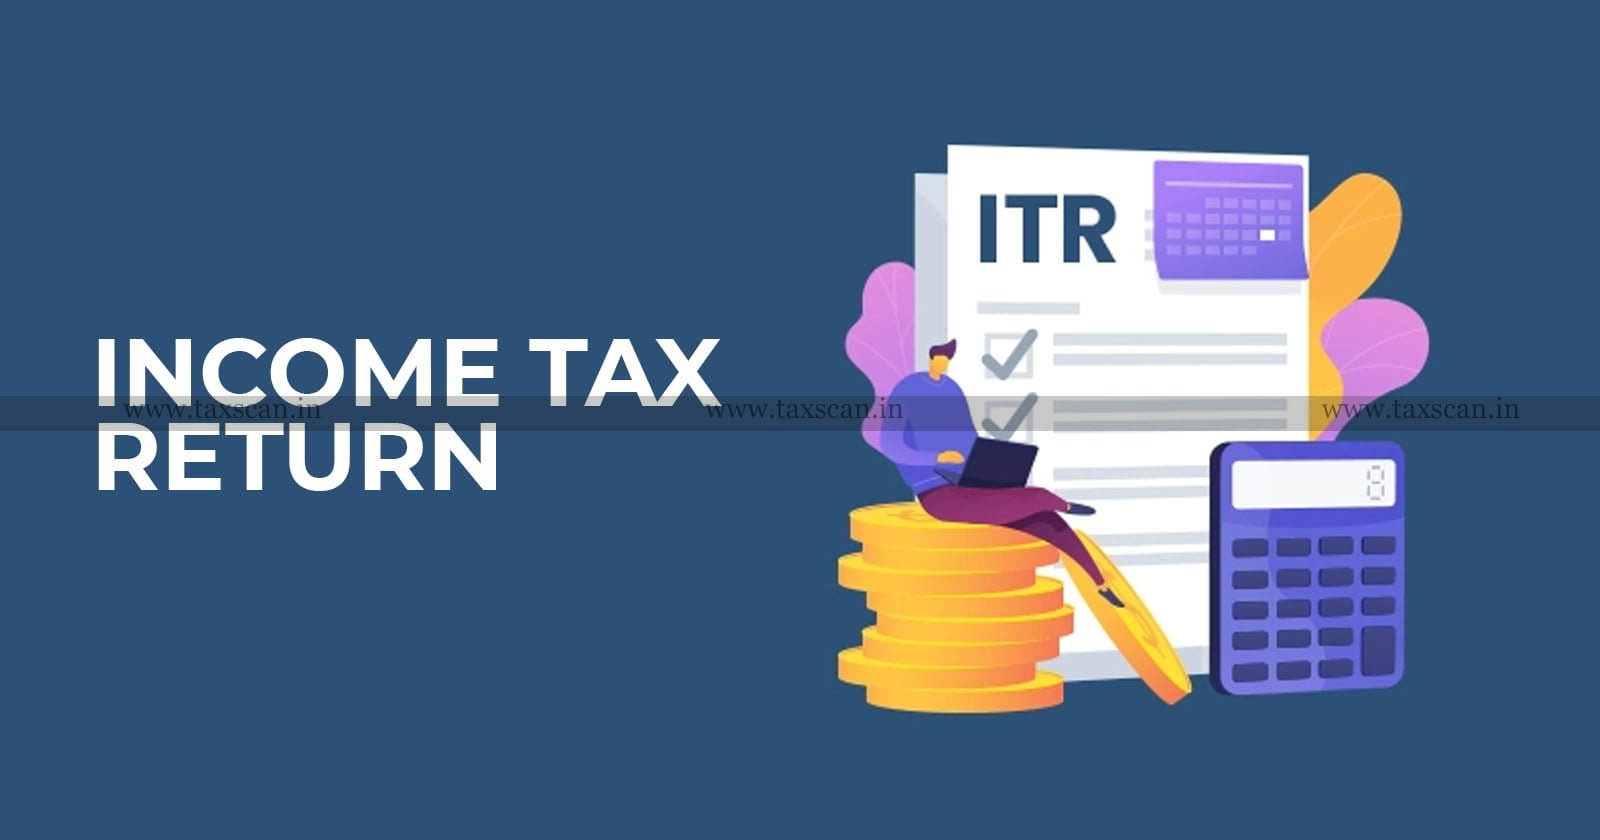 Income Tax - Income Tax Return - ITR - taxscan